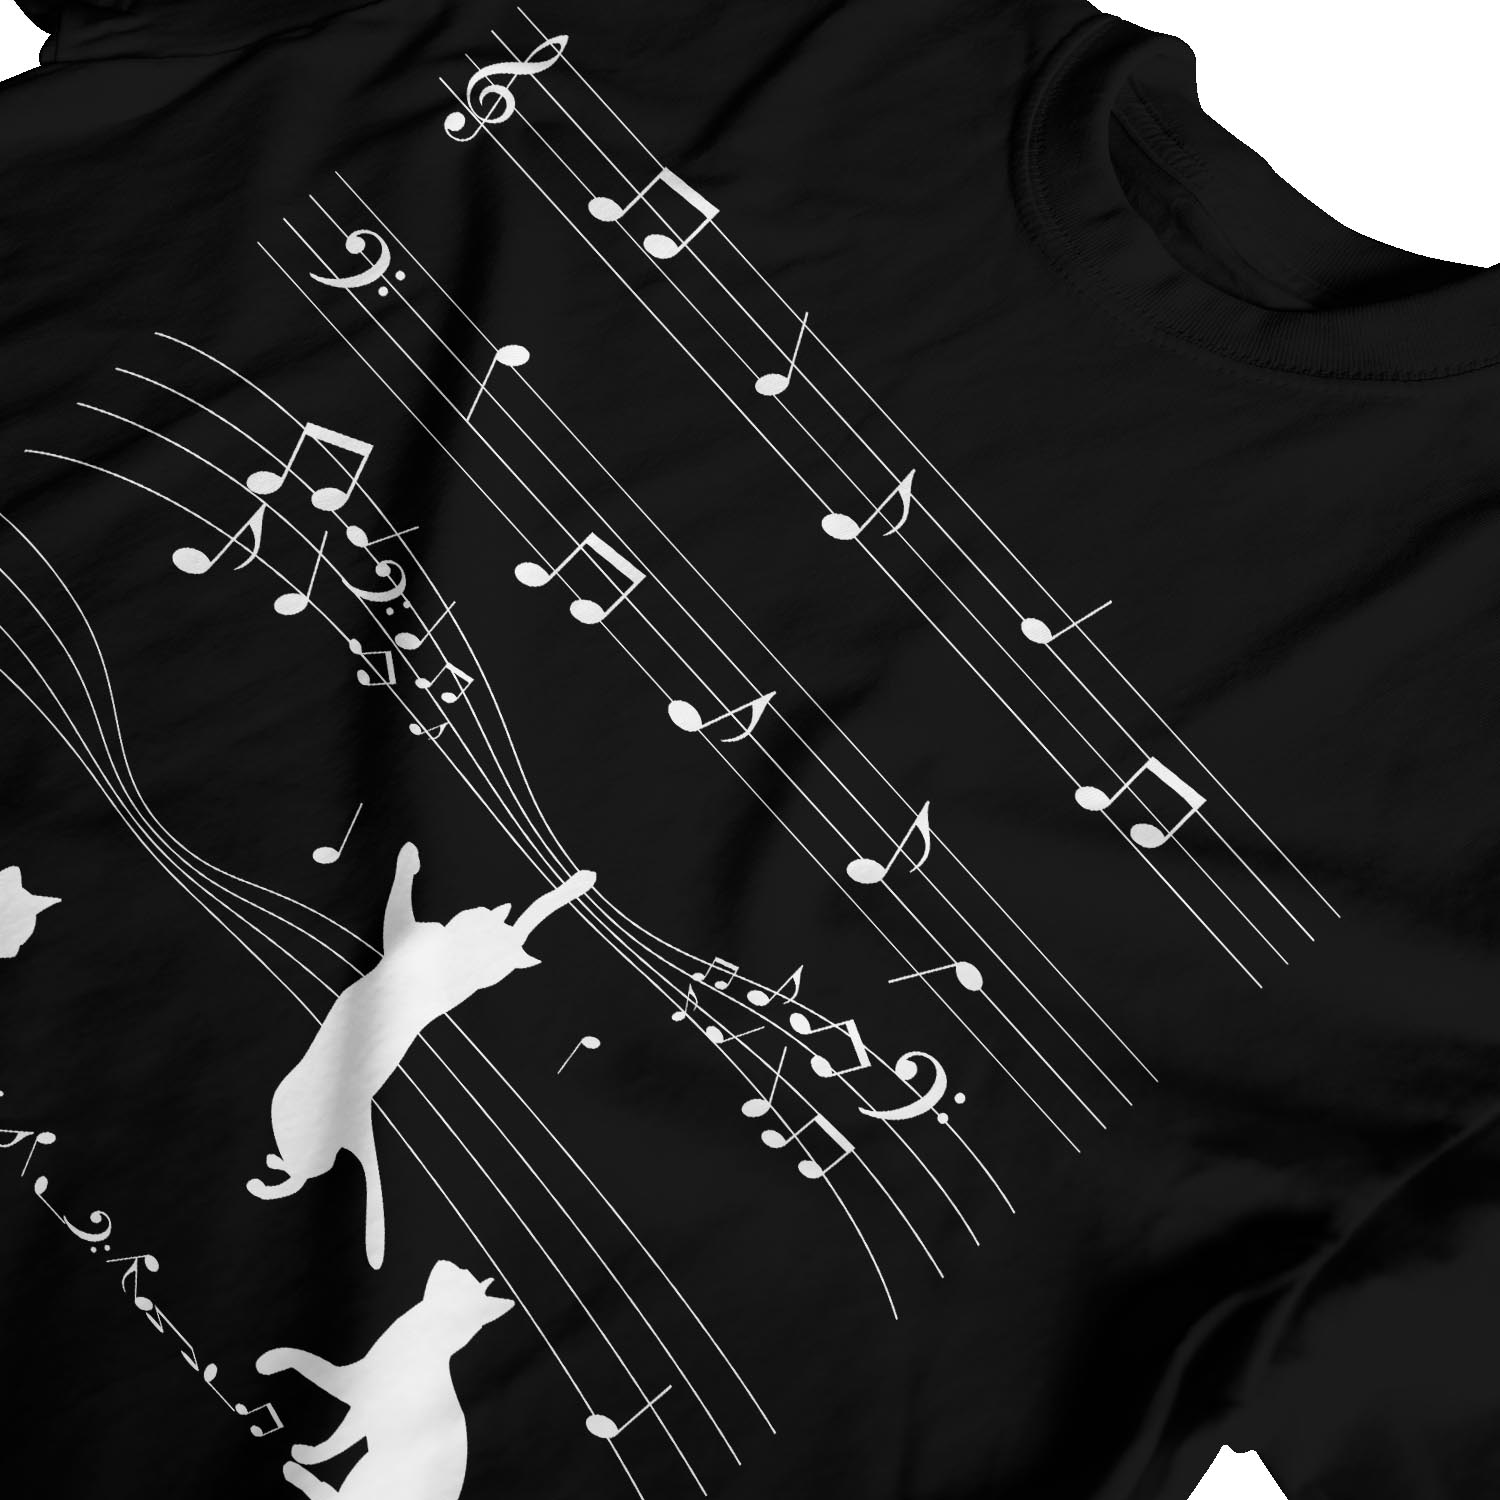 1Tee hoja de música para hombre y Gatos T-Shirt